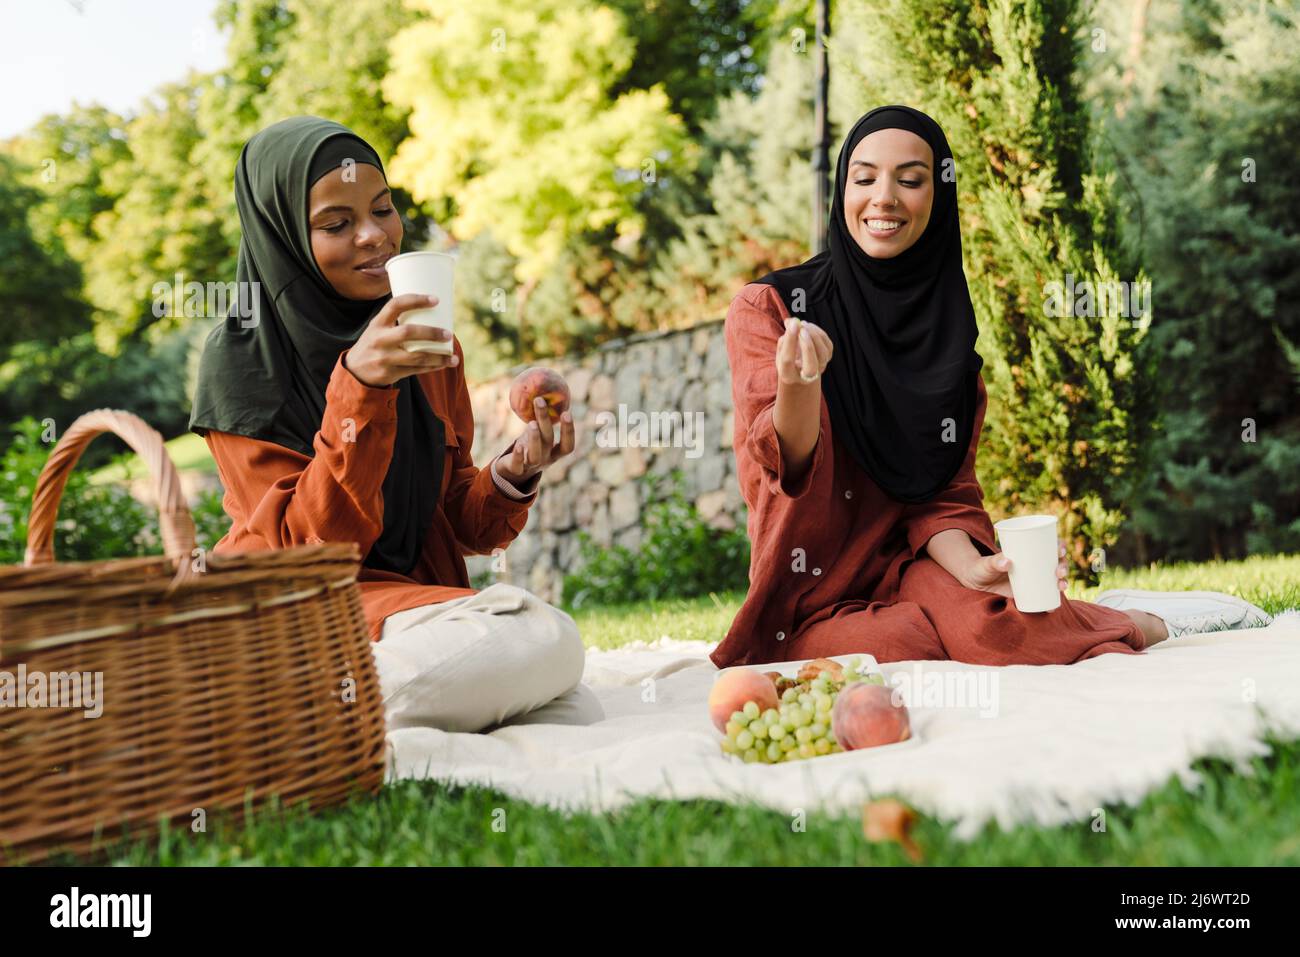 Multiracial muslim women smiling and eating fruits during picnic at green park Stock Photo